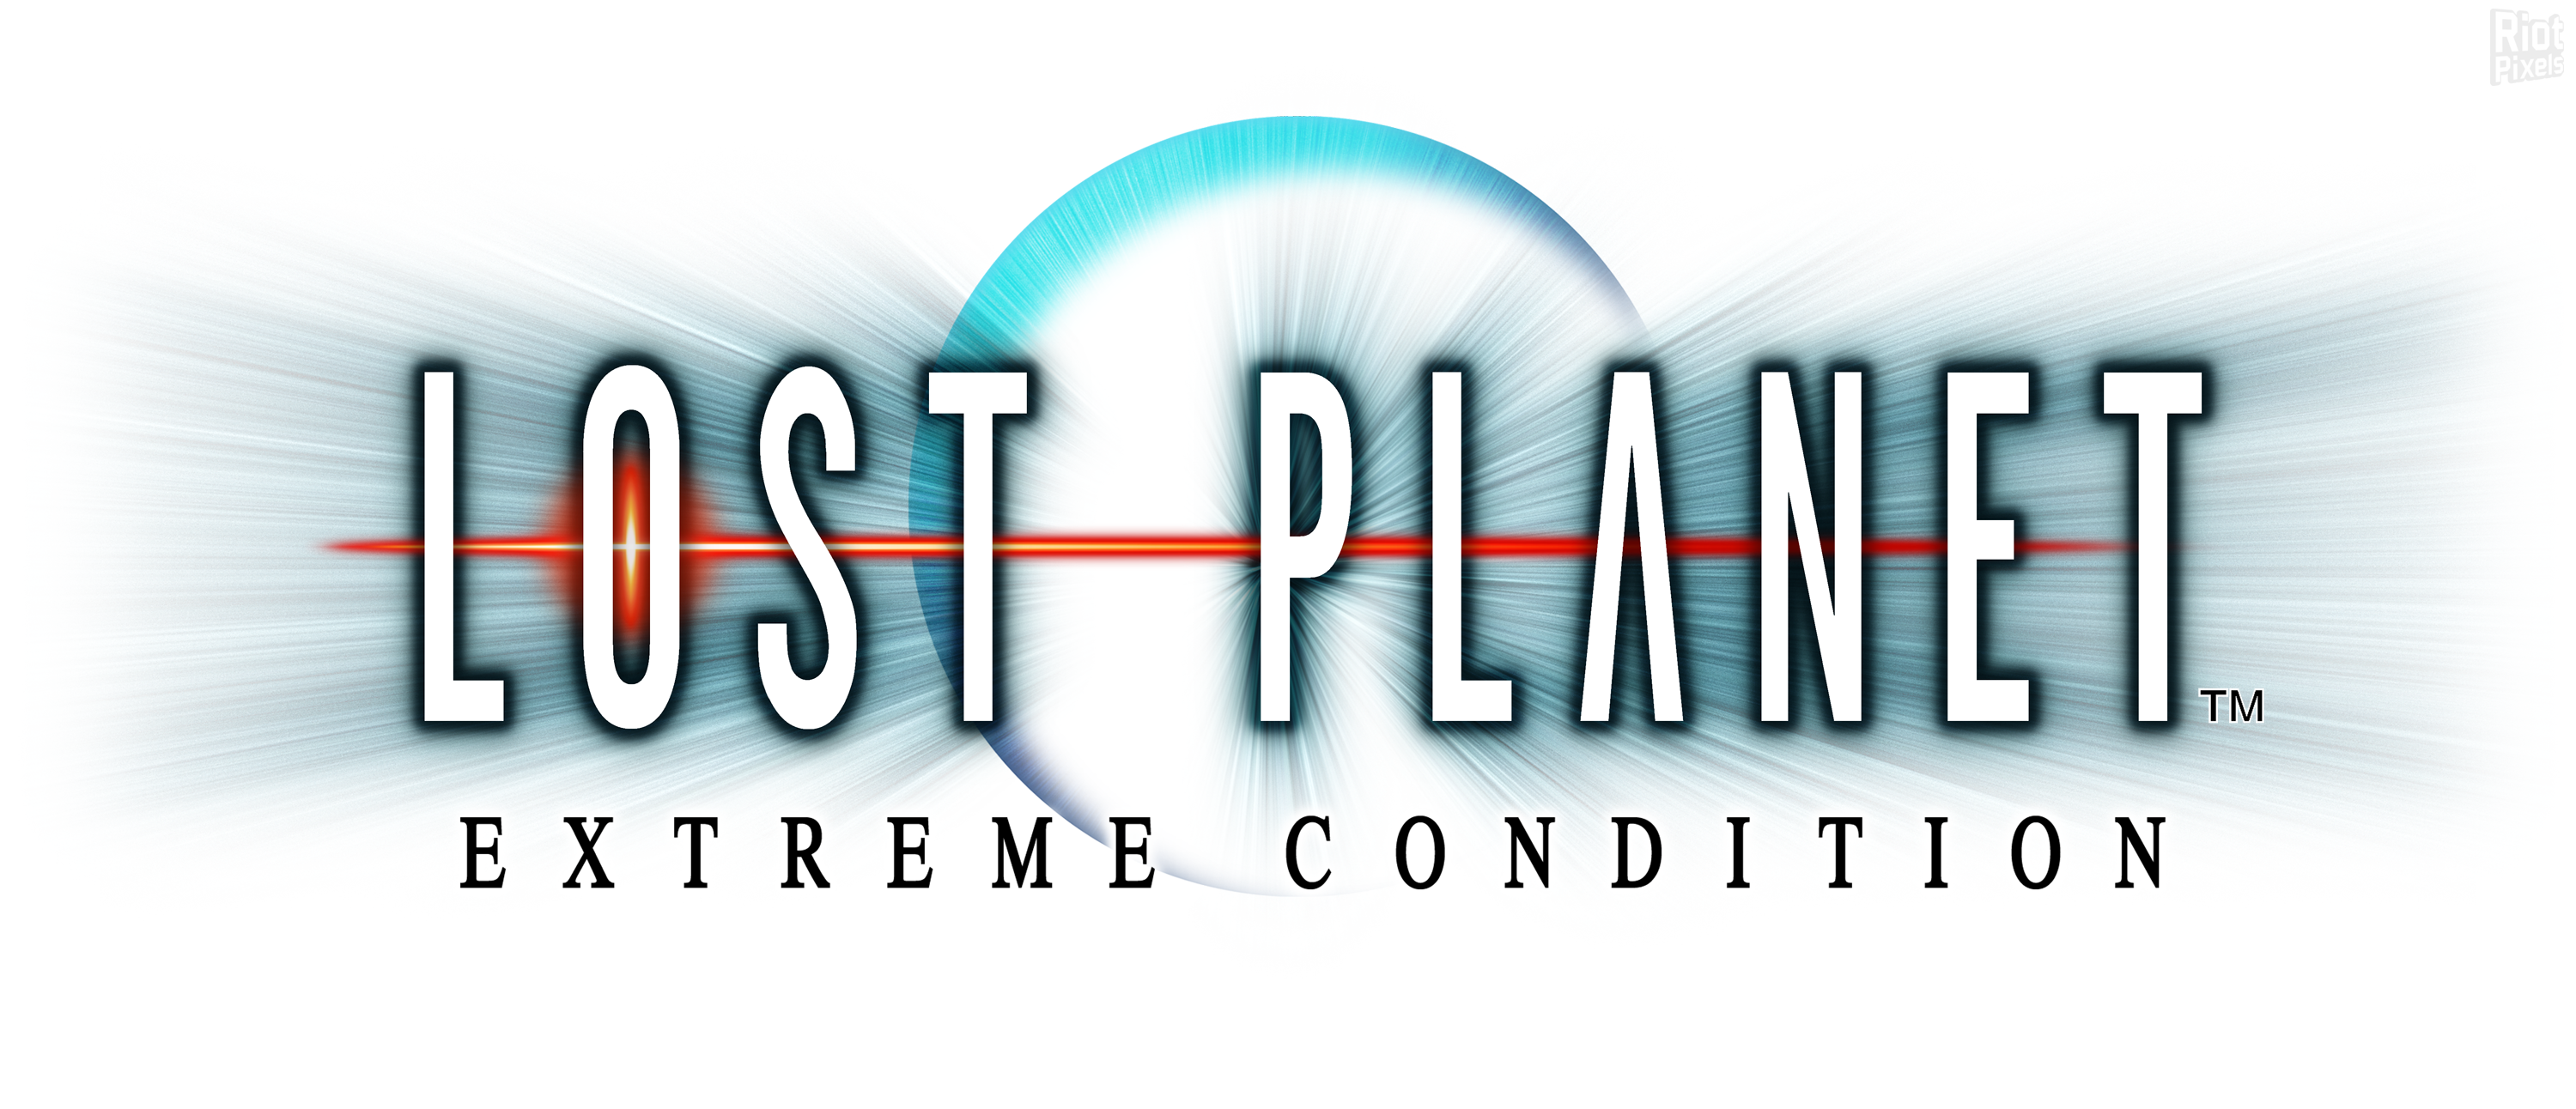 Lost planet 2 на steam фото 67